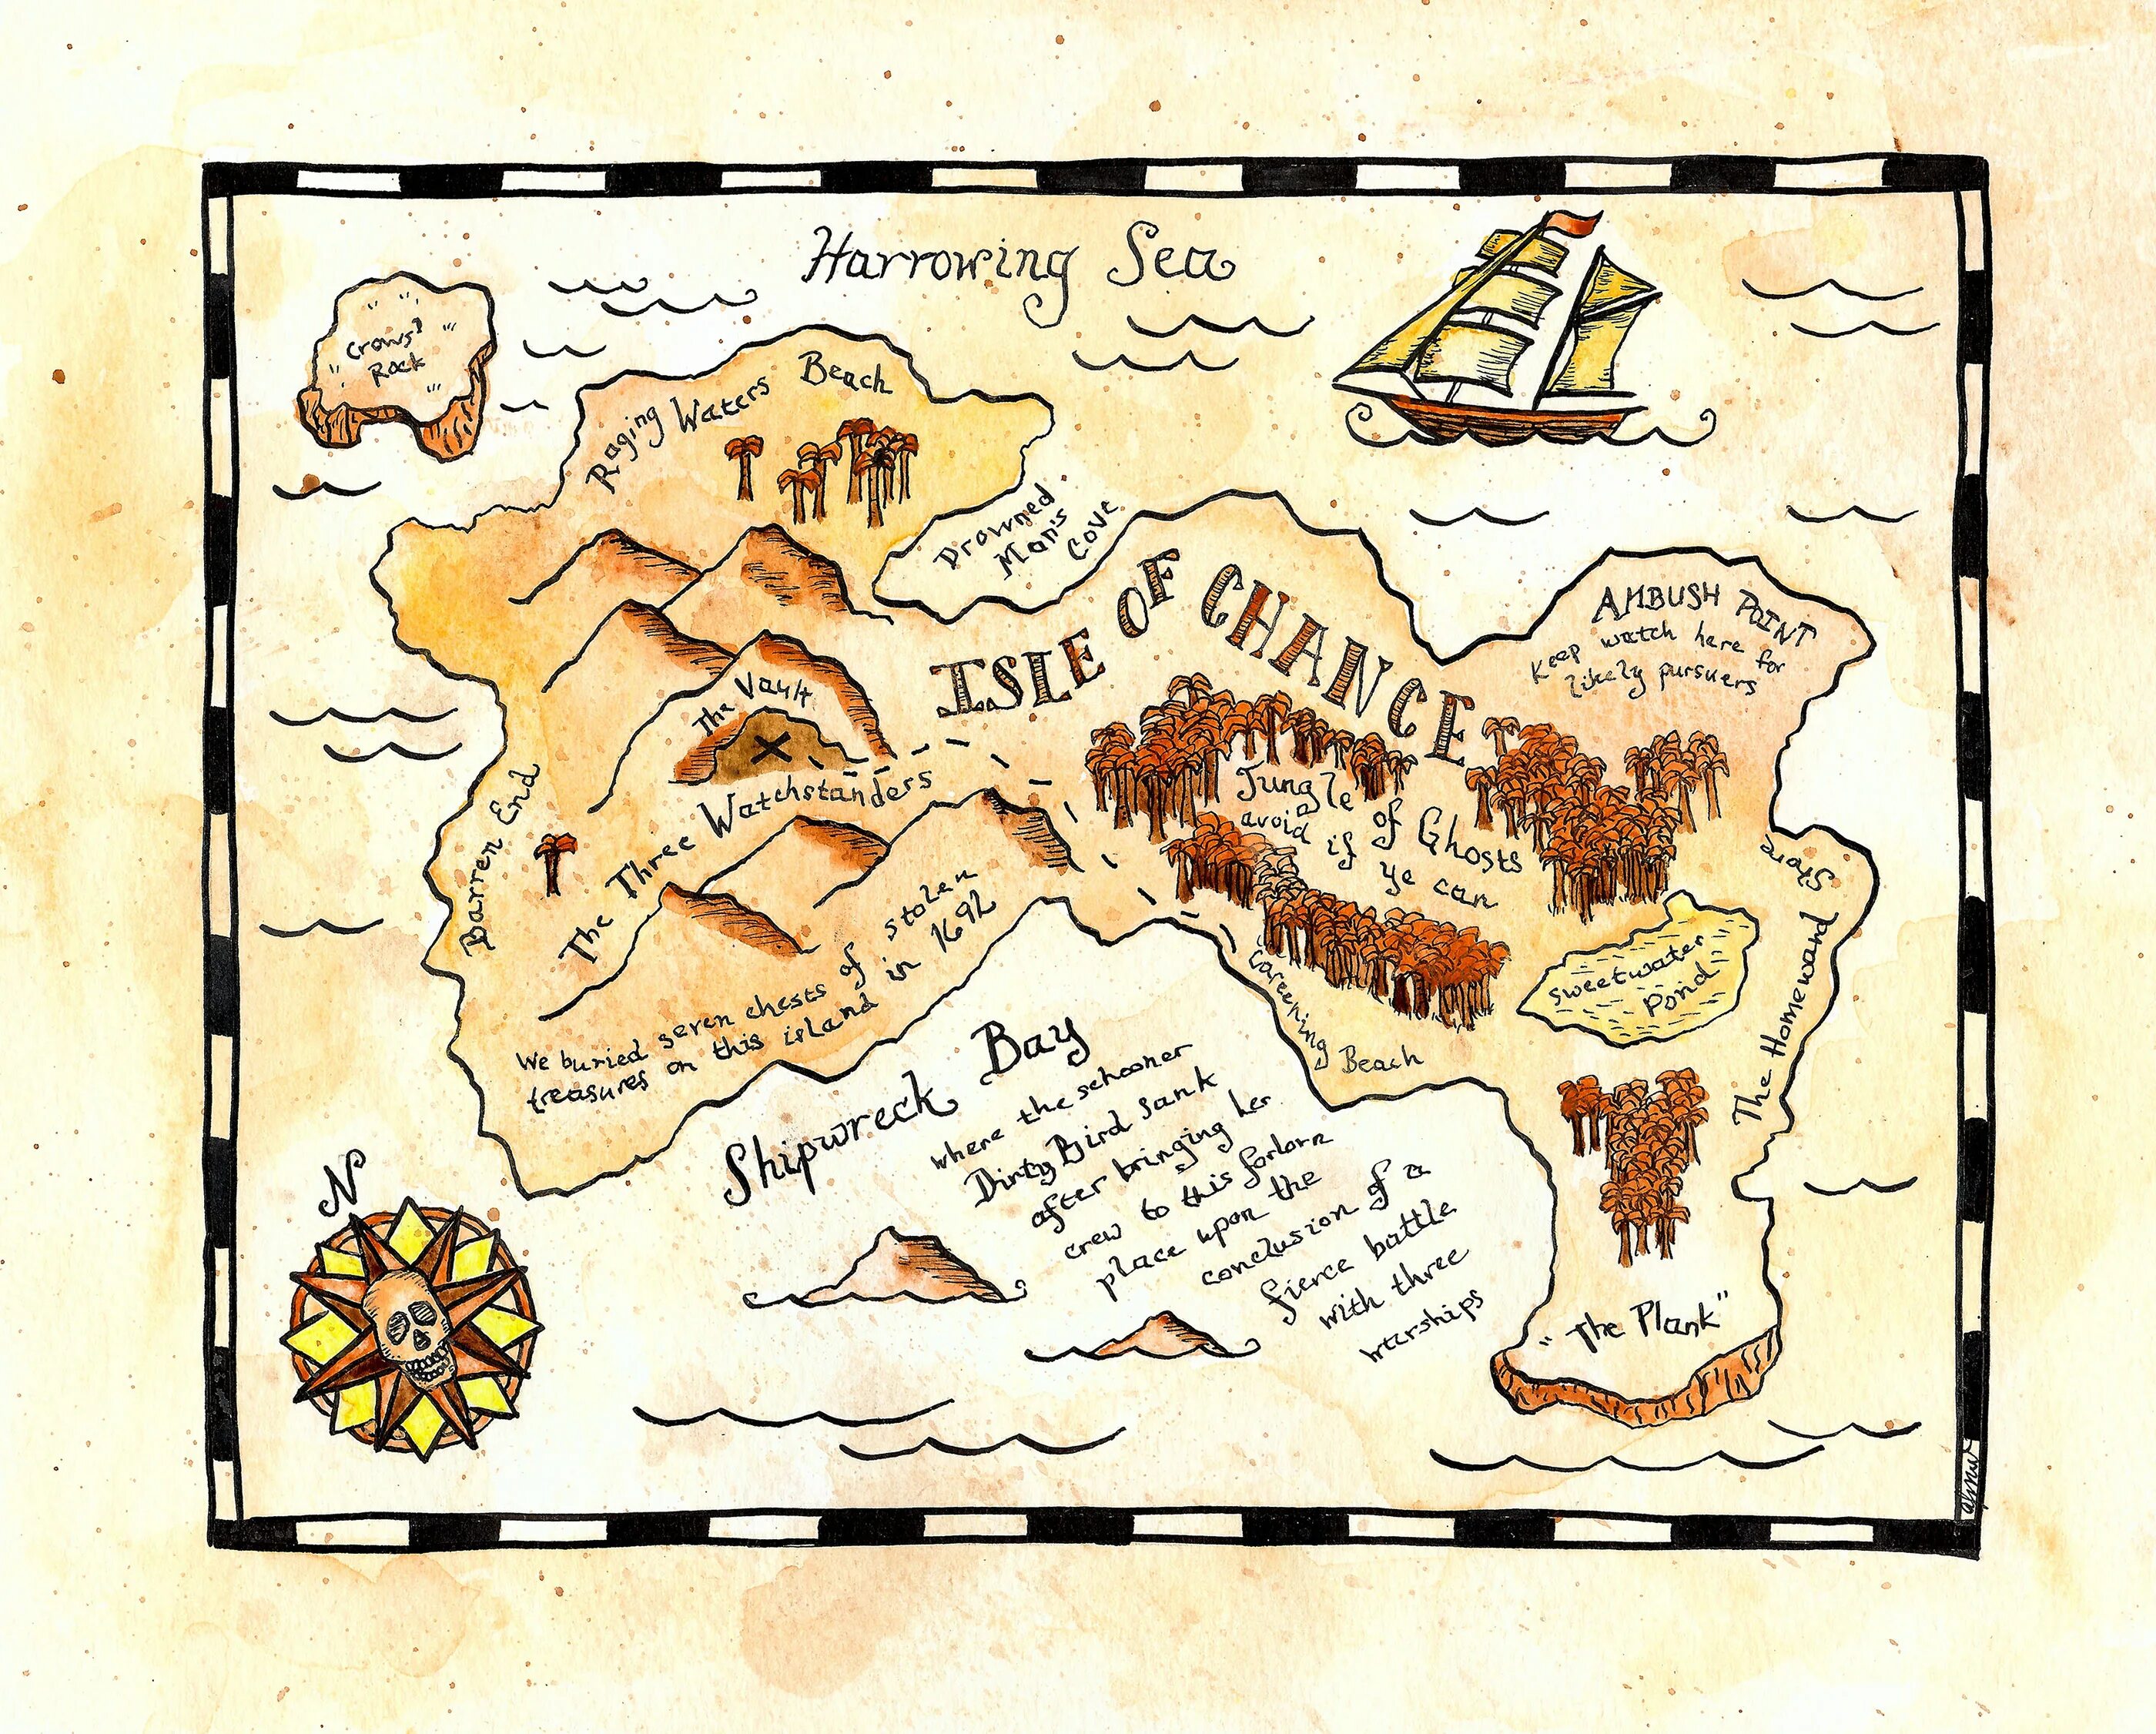 Карта робинзона крузо. Карта острова Робинзона Крузо. Остров Робинзона Крузо карта острова. Карта путешествий Робинзона Крузо. Карта острова Робинзона Крузо рисунок.